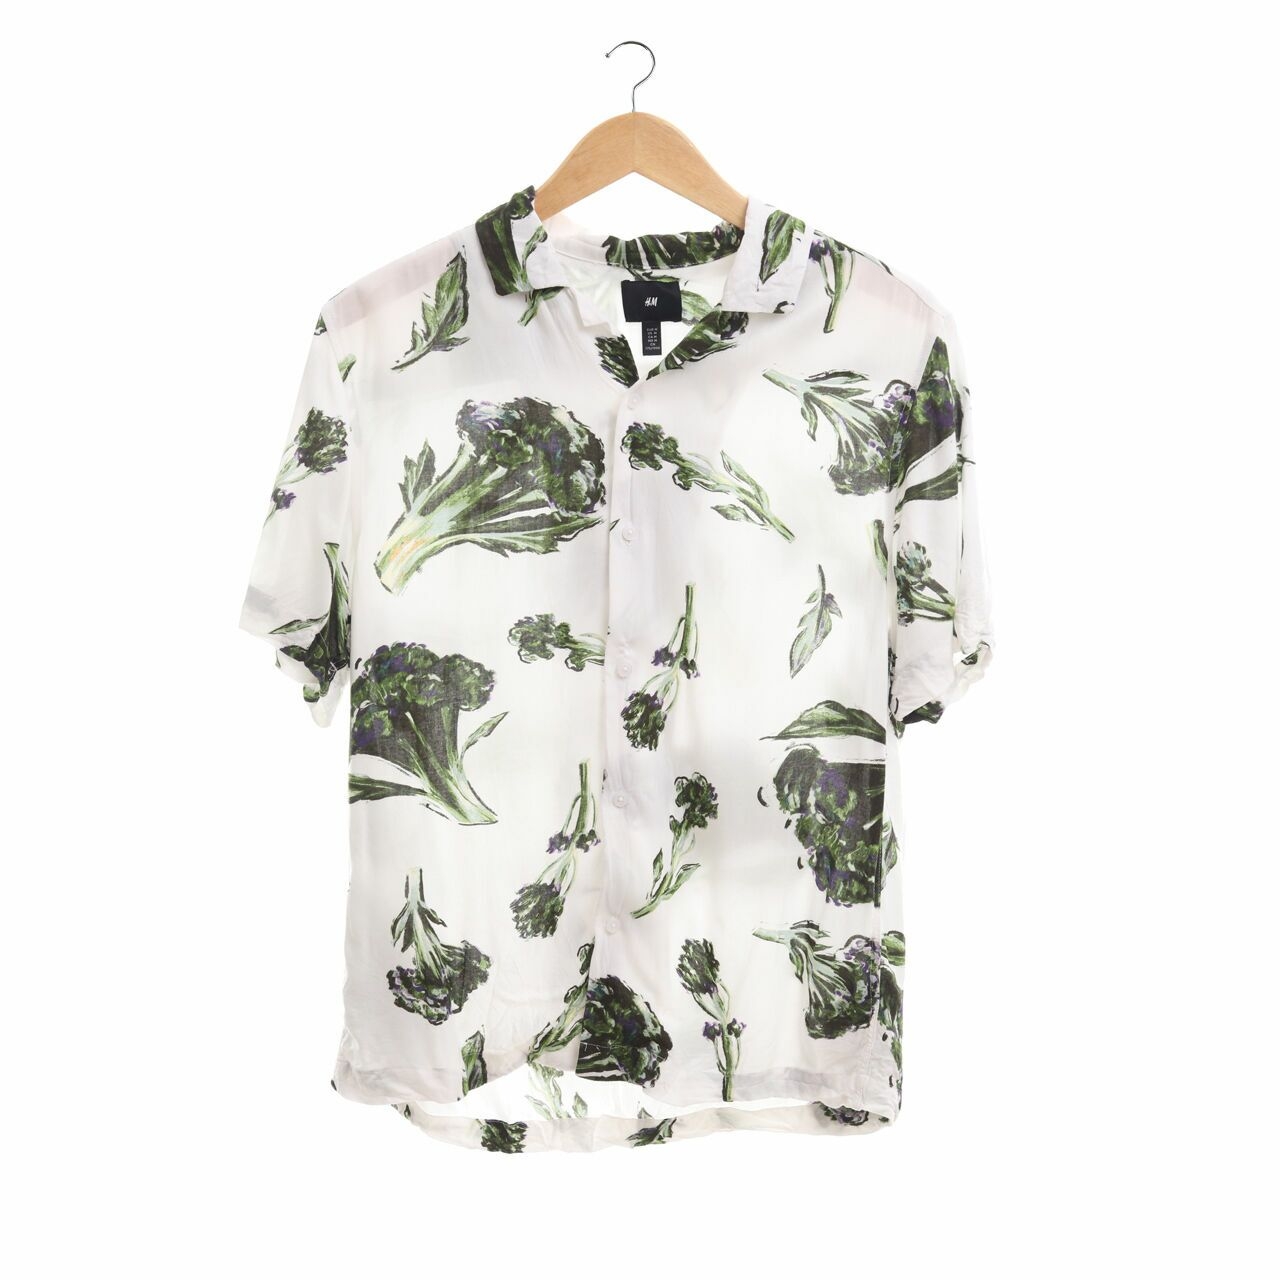 H&M White Printed Leaf Shirt